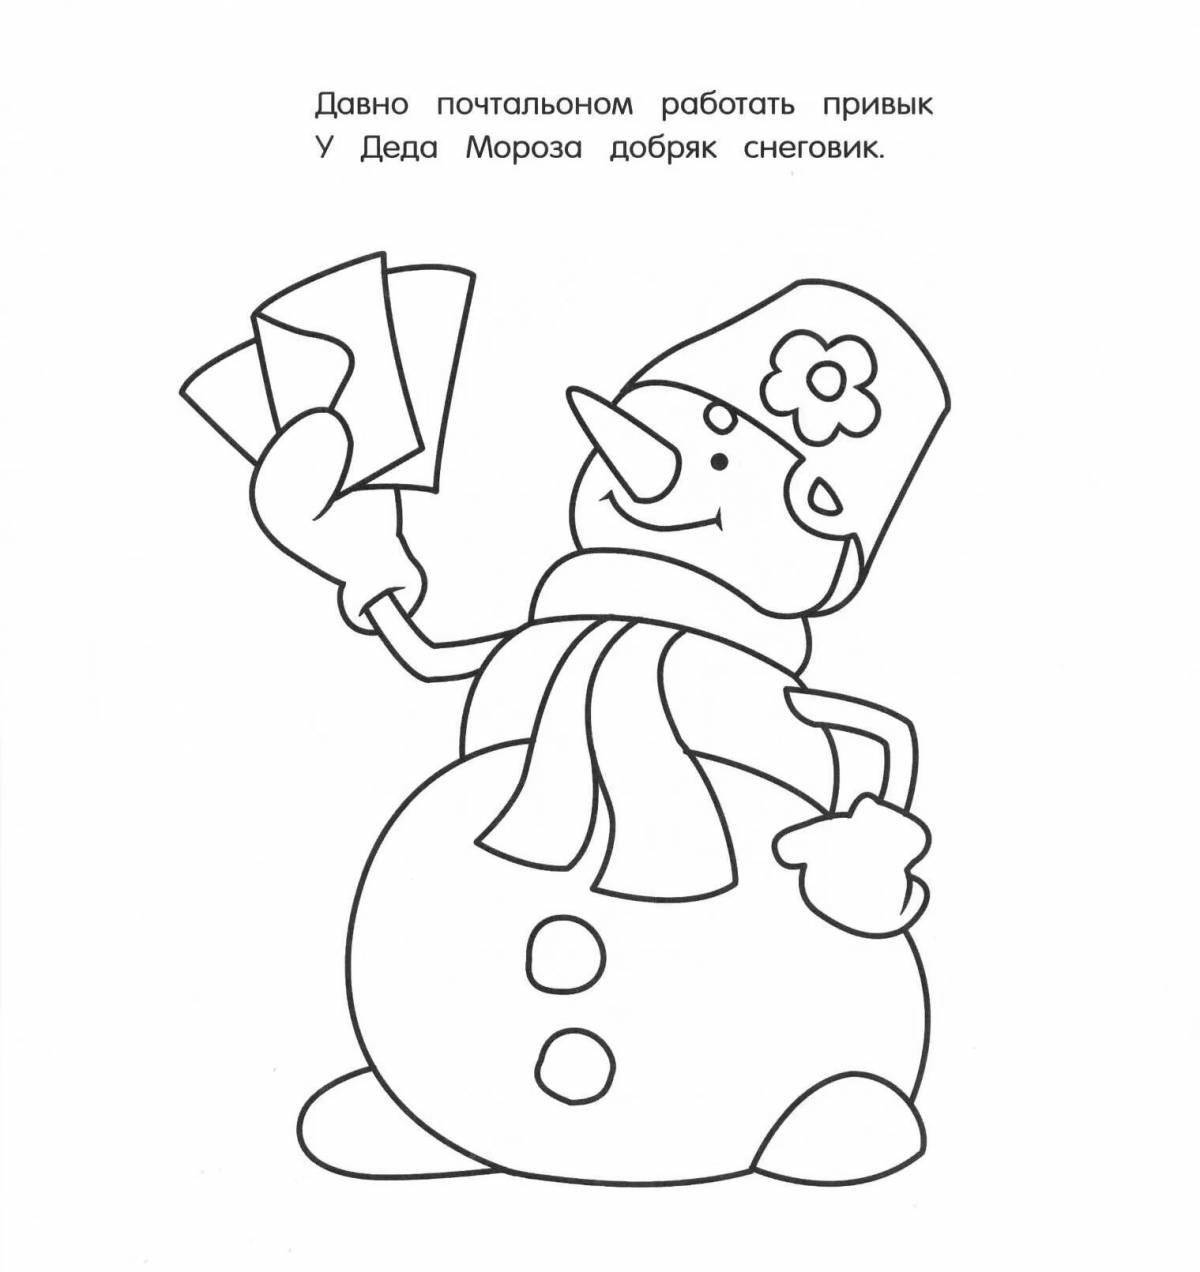 Exquisite snowman coloring book